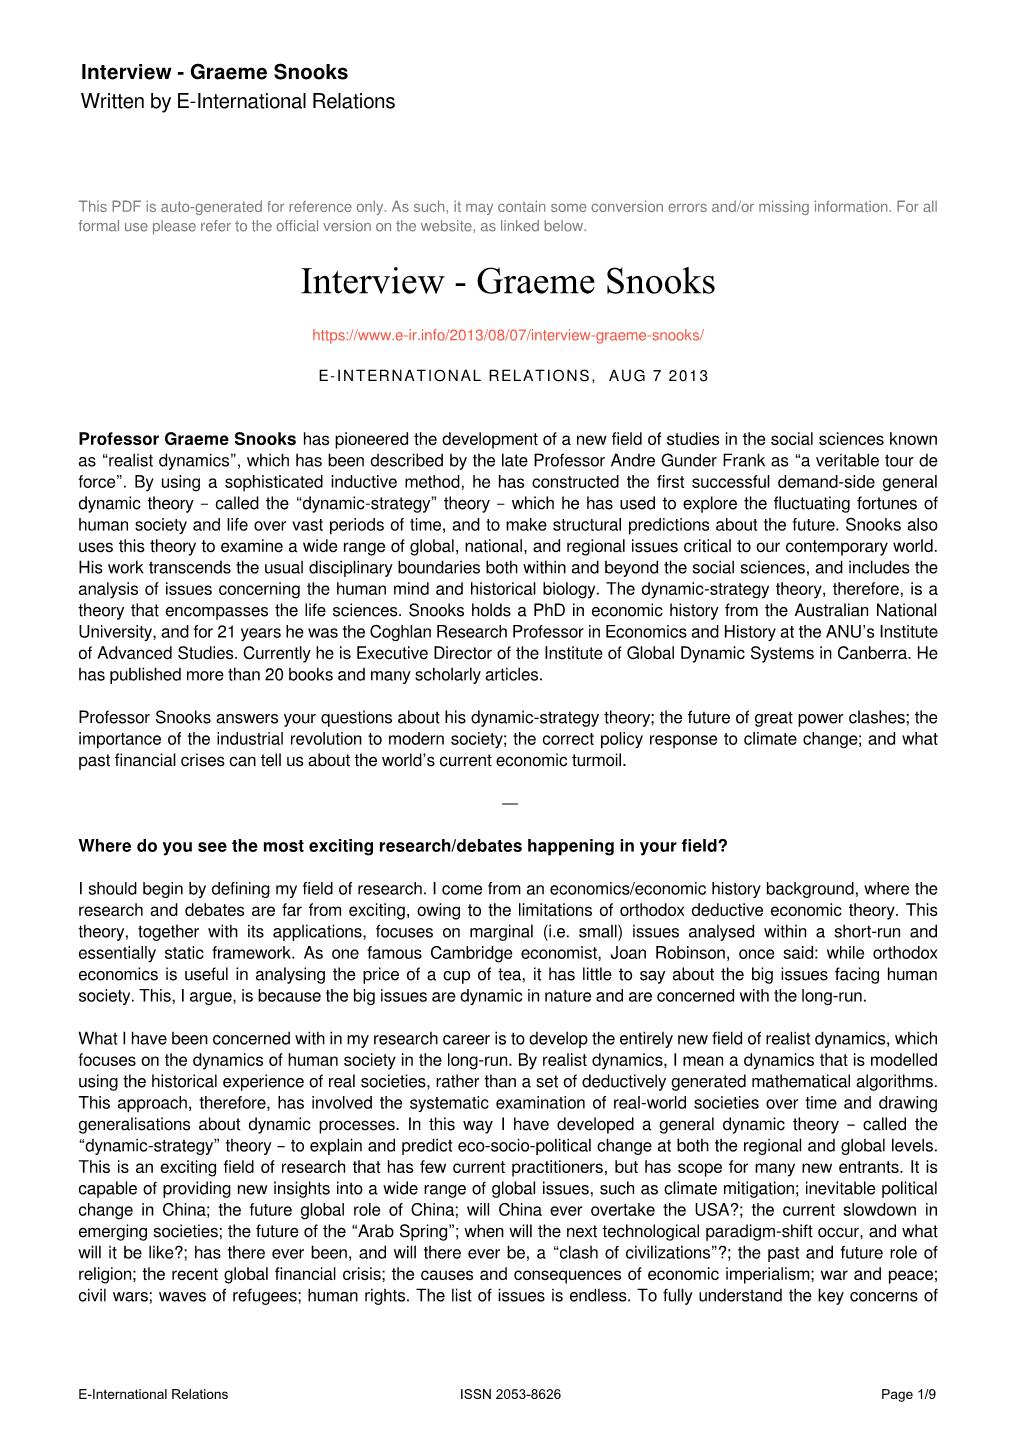 Graeme Snooks Written by E-International Relations